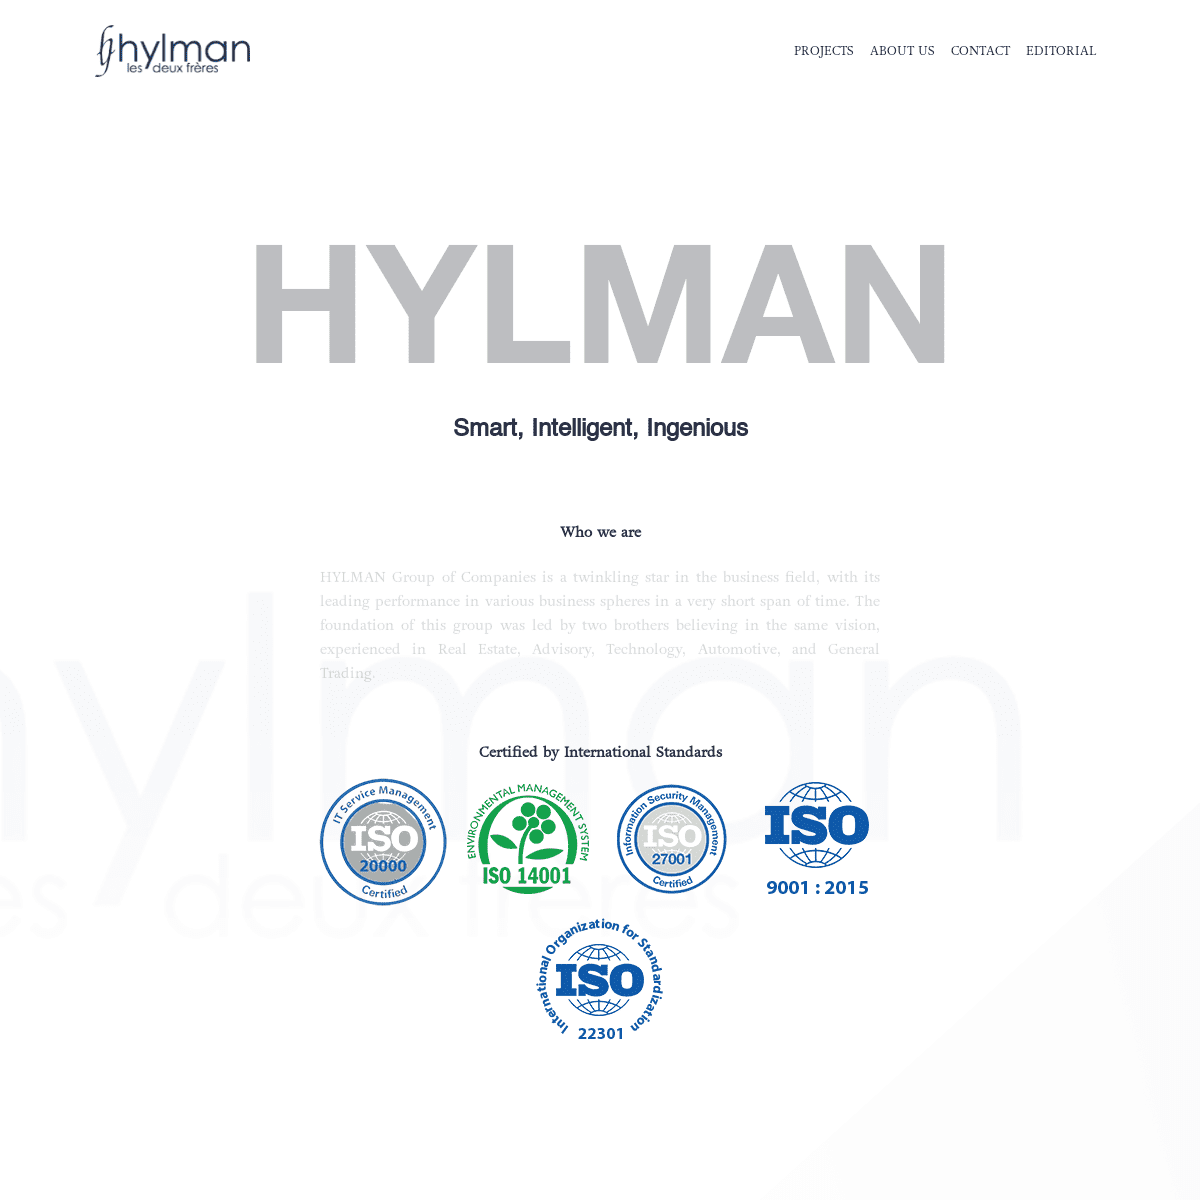 A complete backup of https://hylman.com